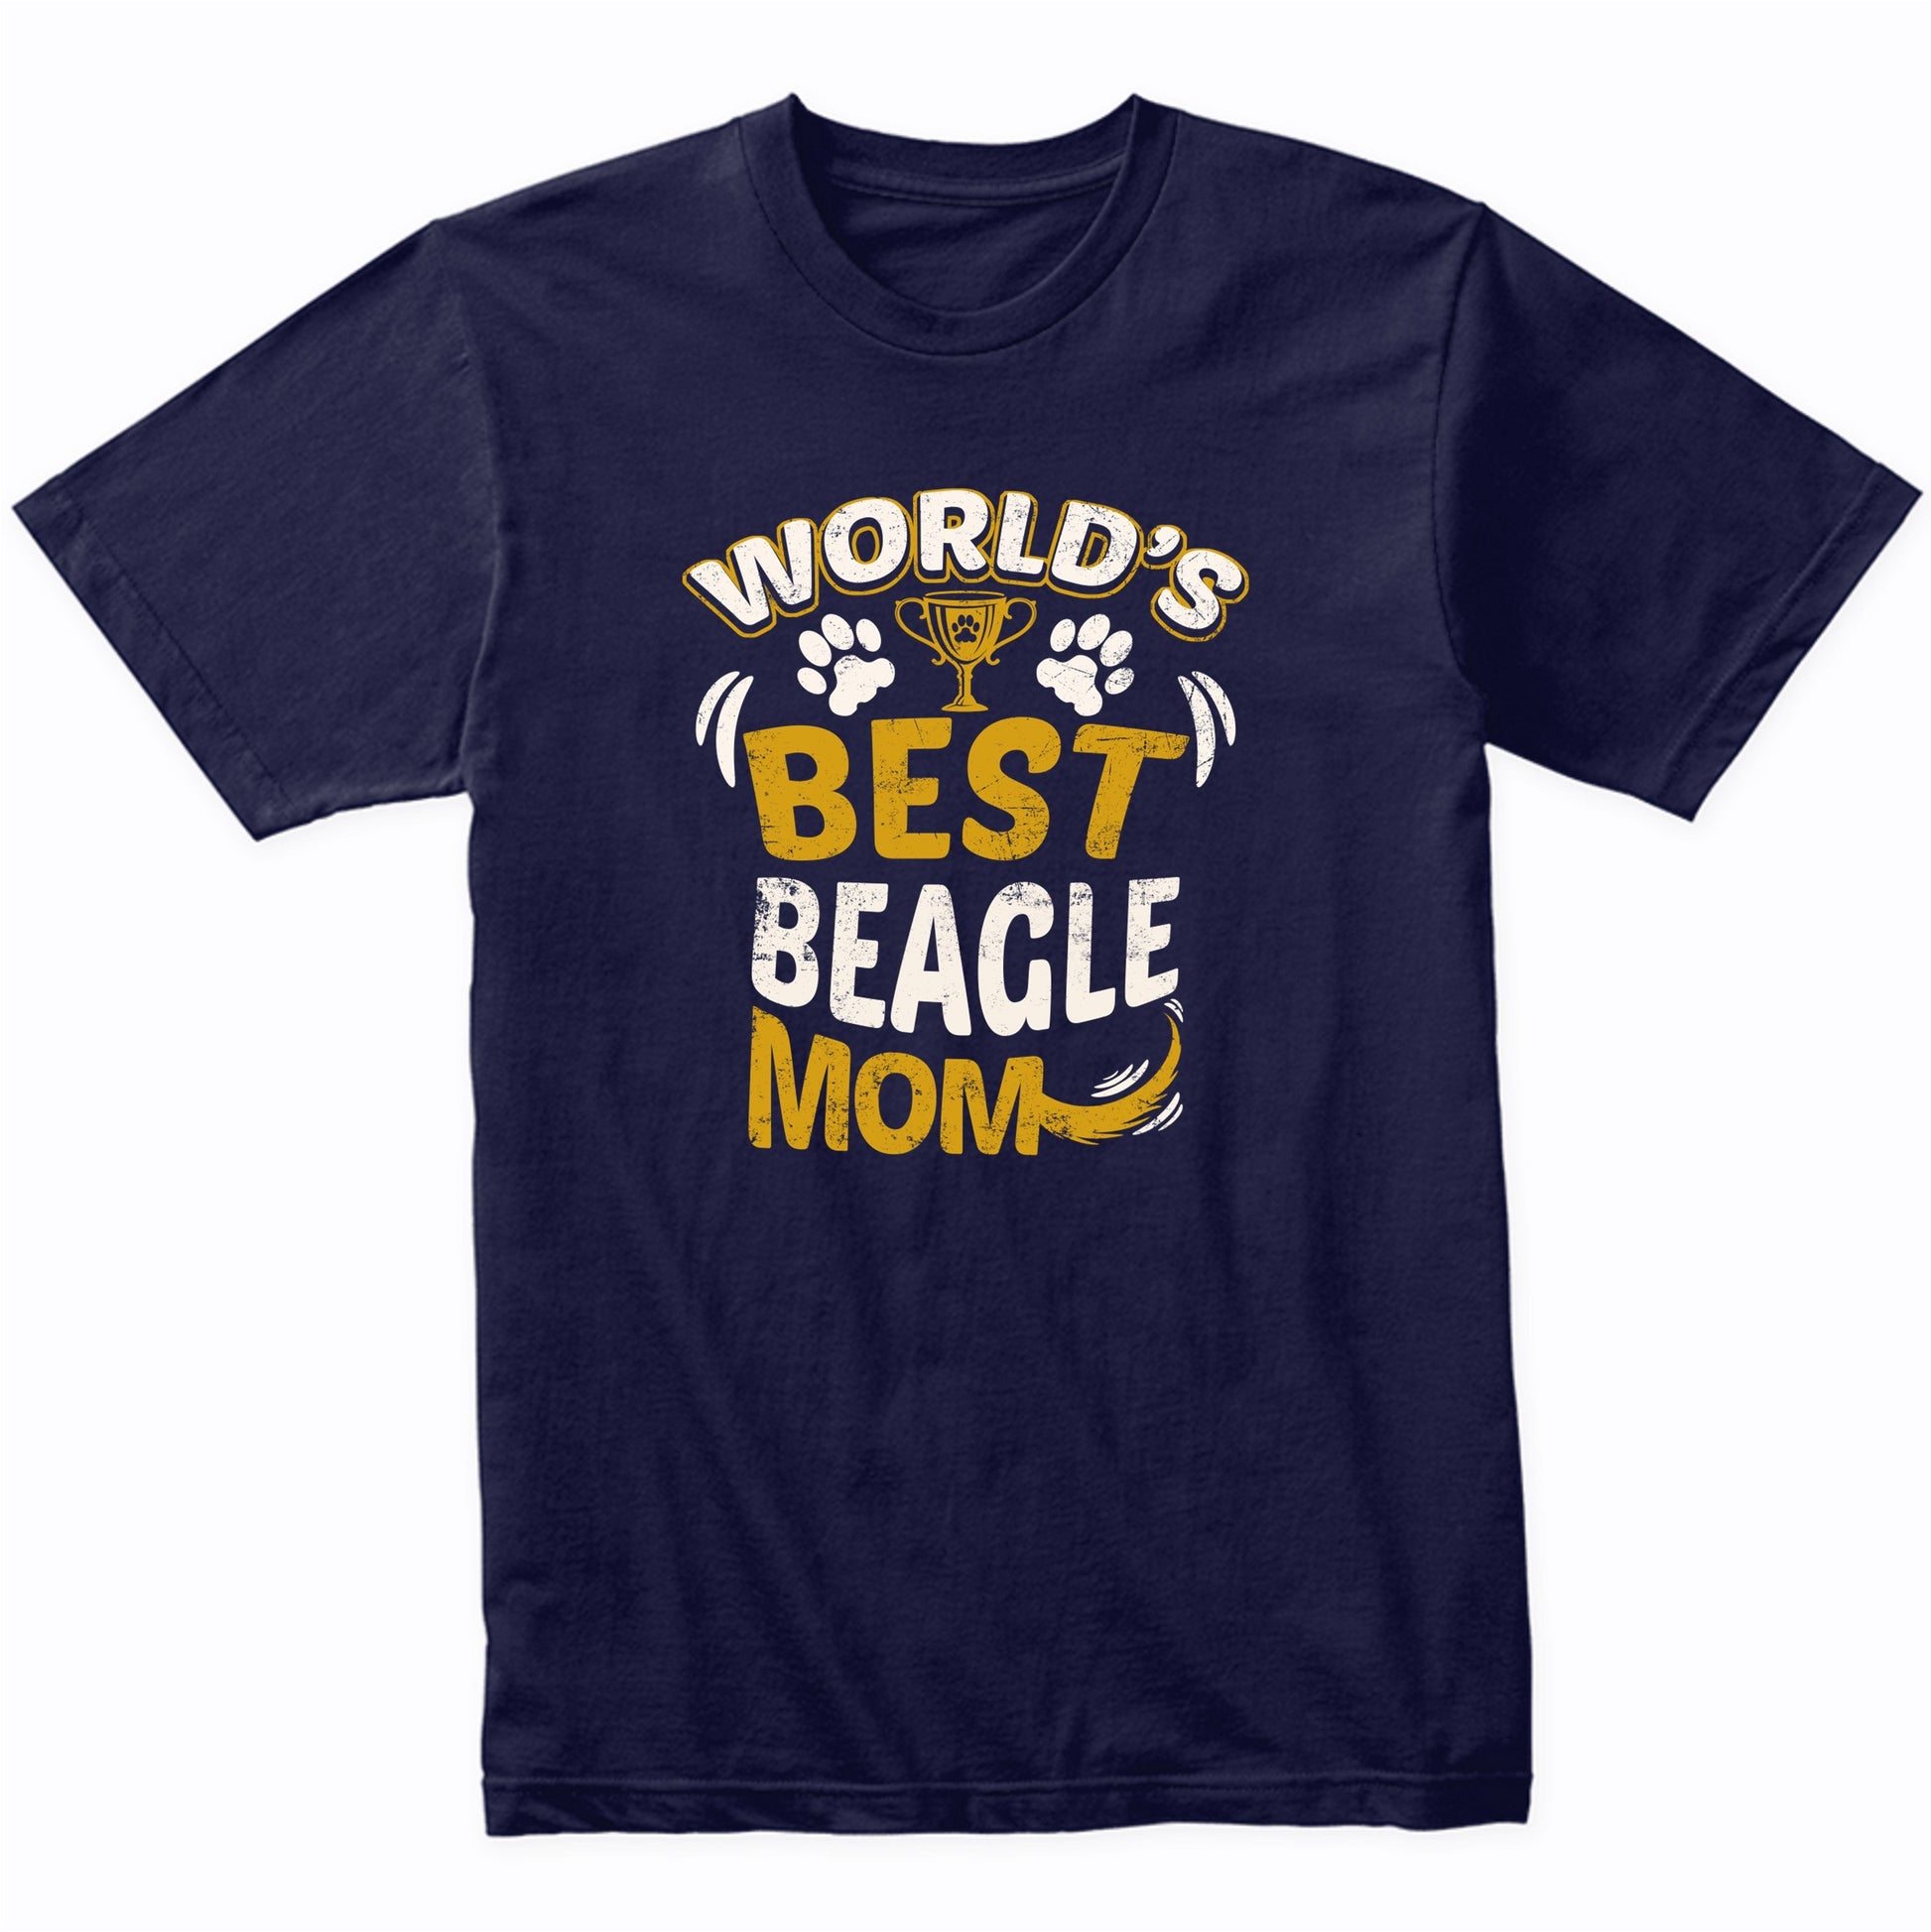 World's Best Beagle Mom Graphic T-Shirt